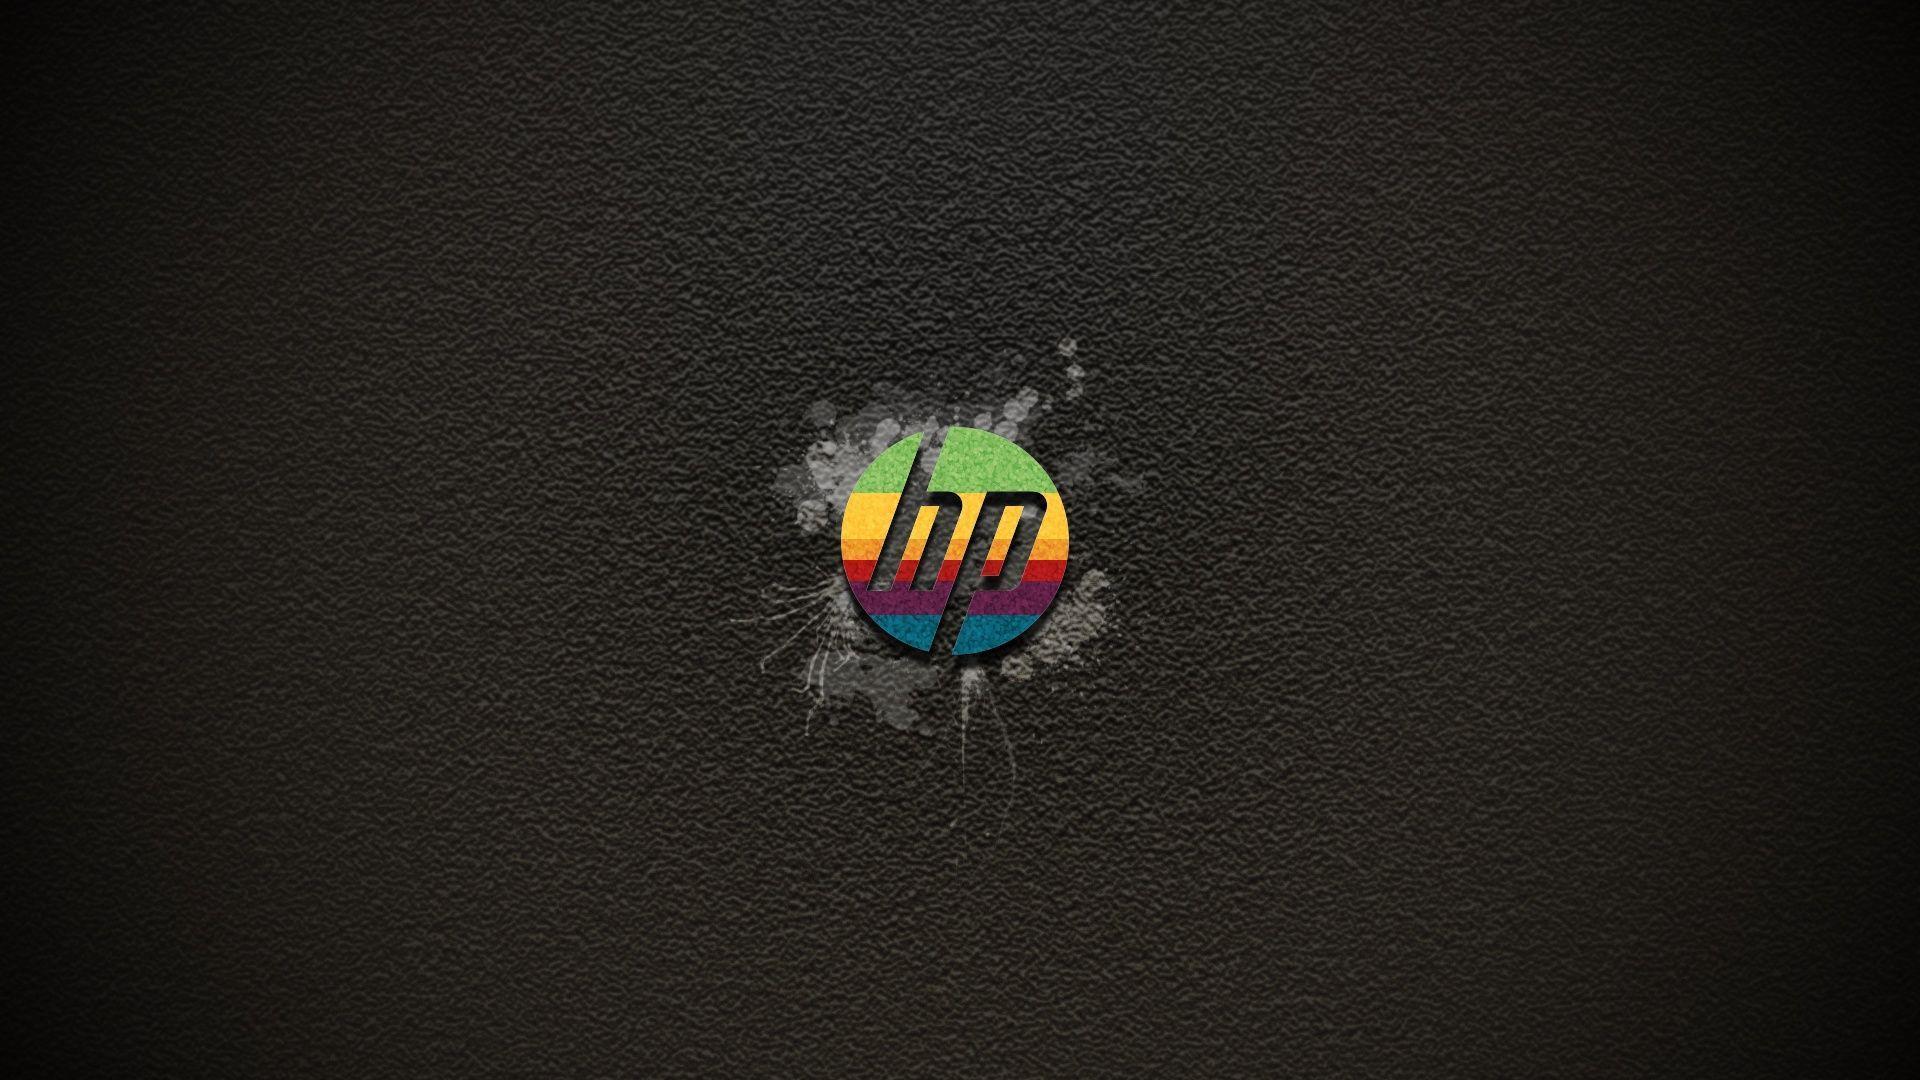 HD HP Wallpapers